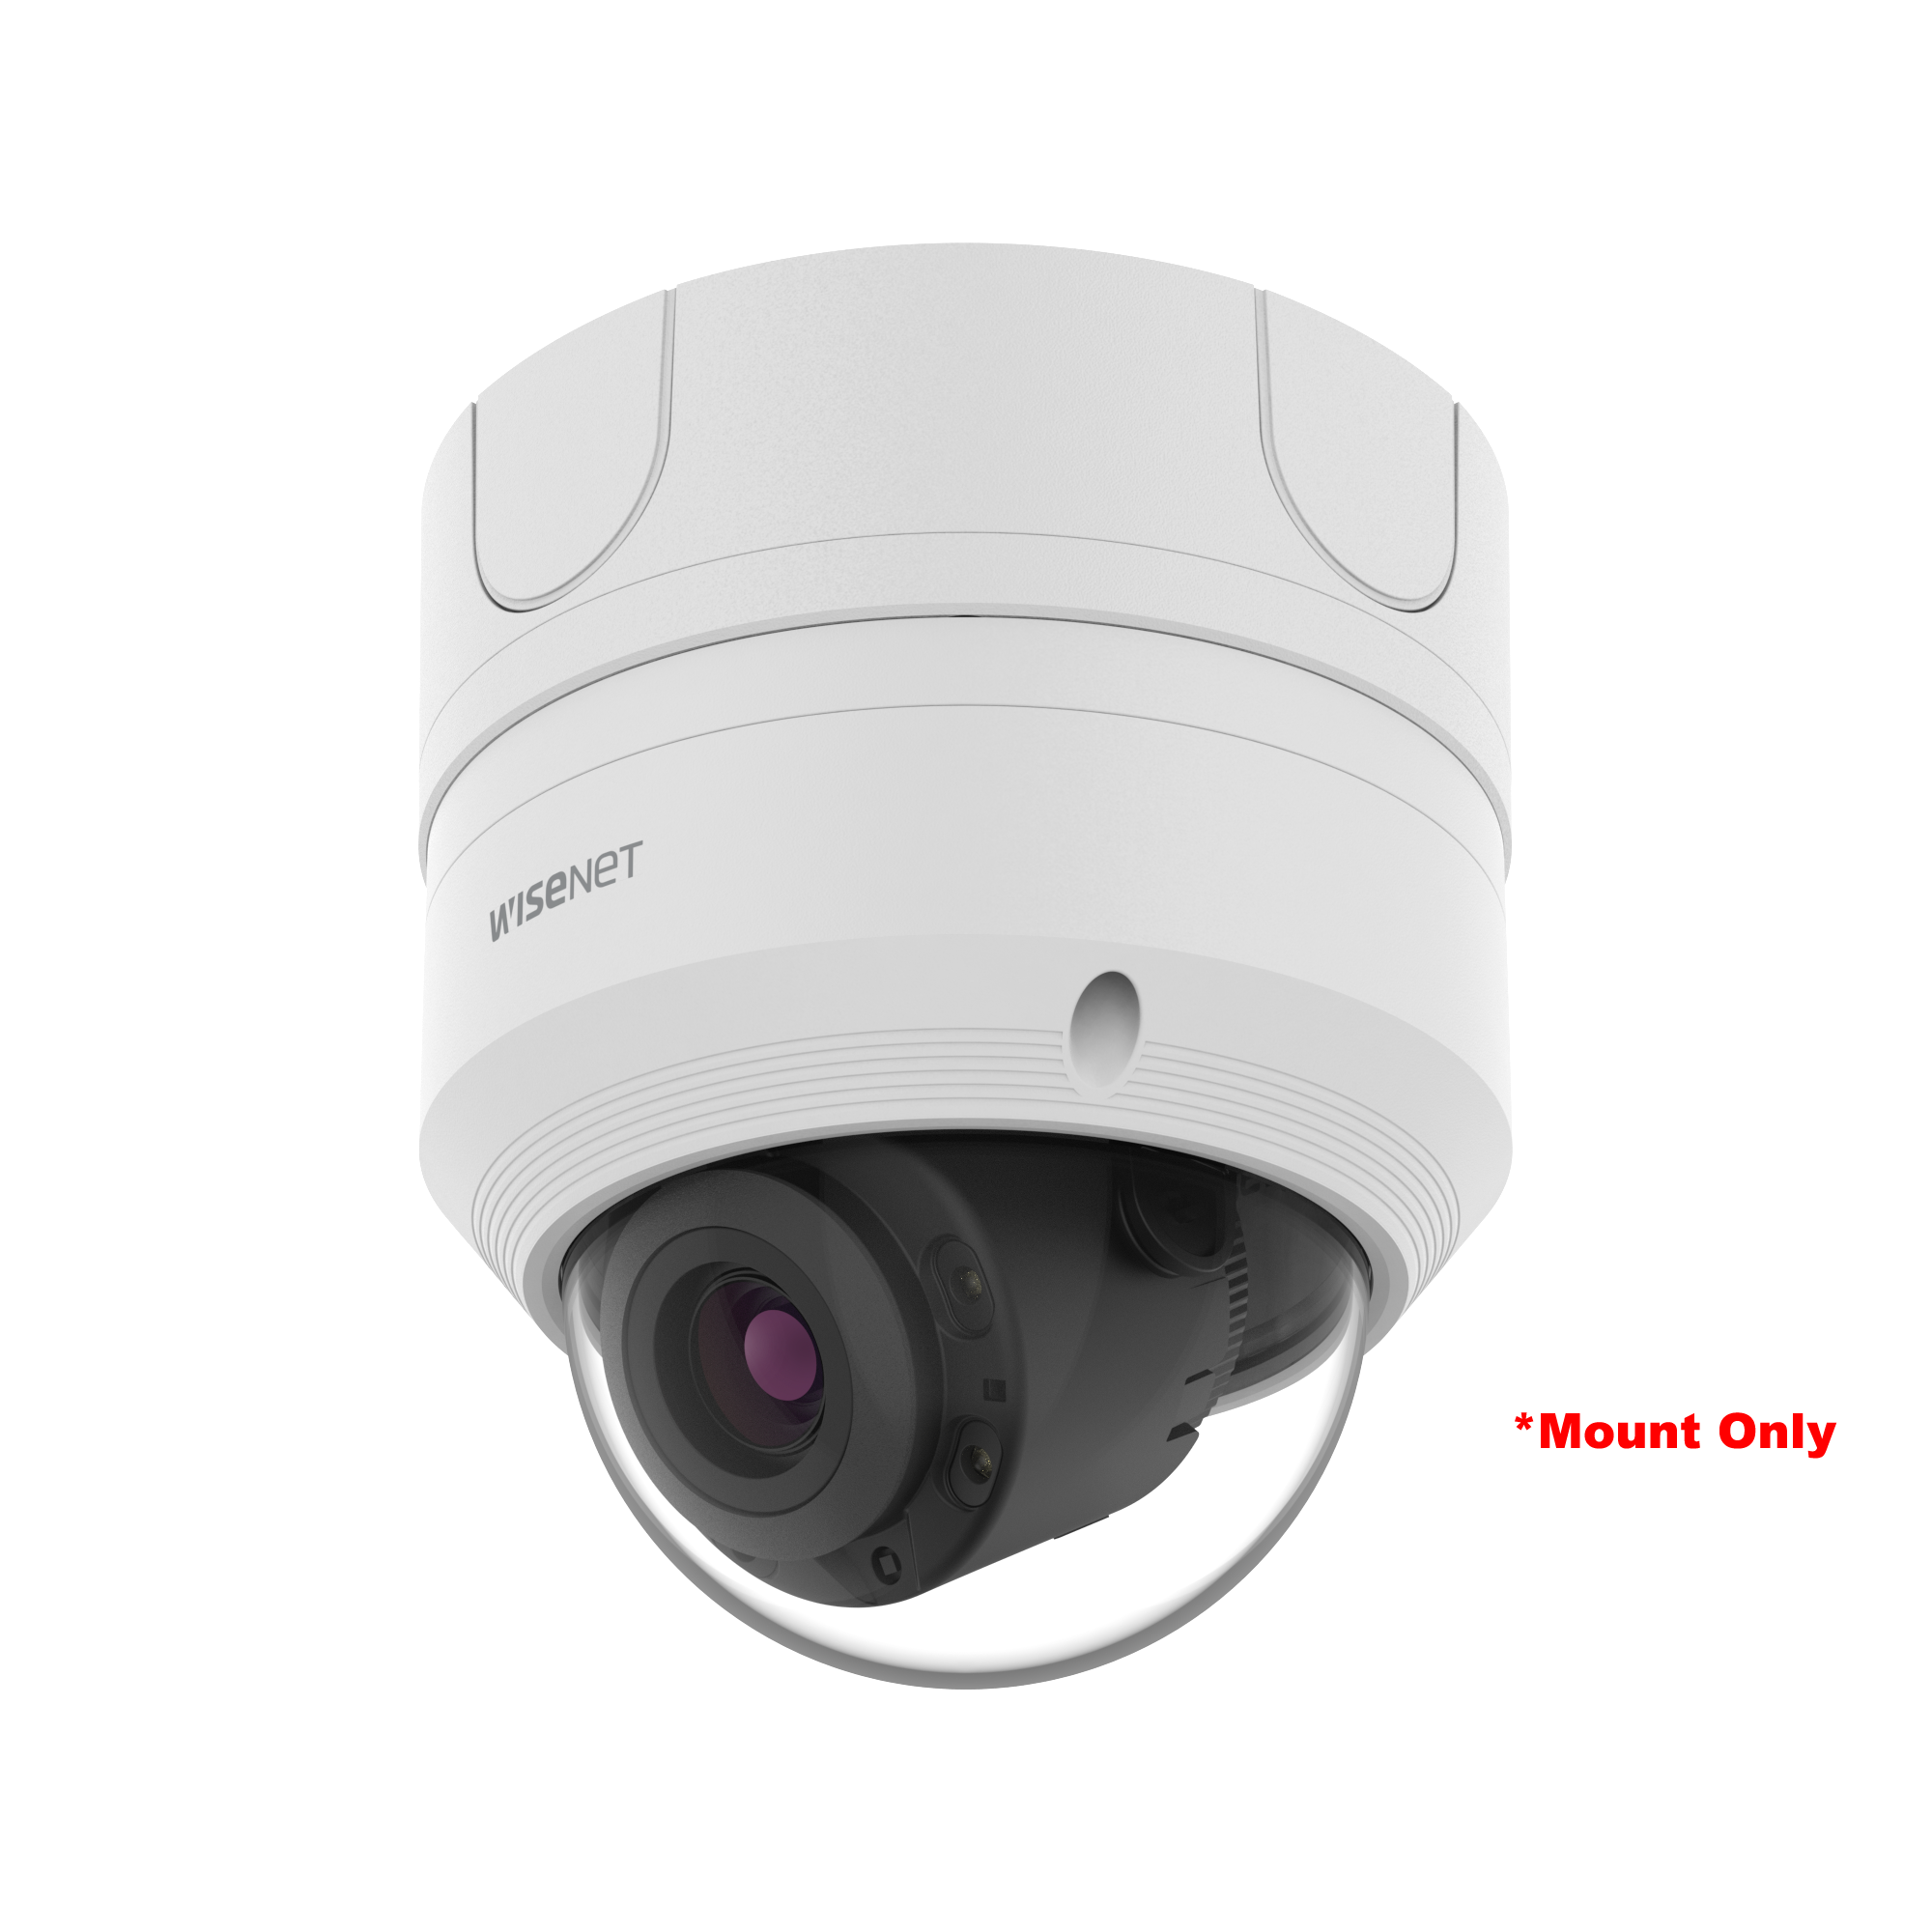 High Tech Security Cameras